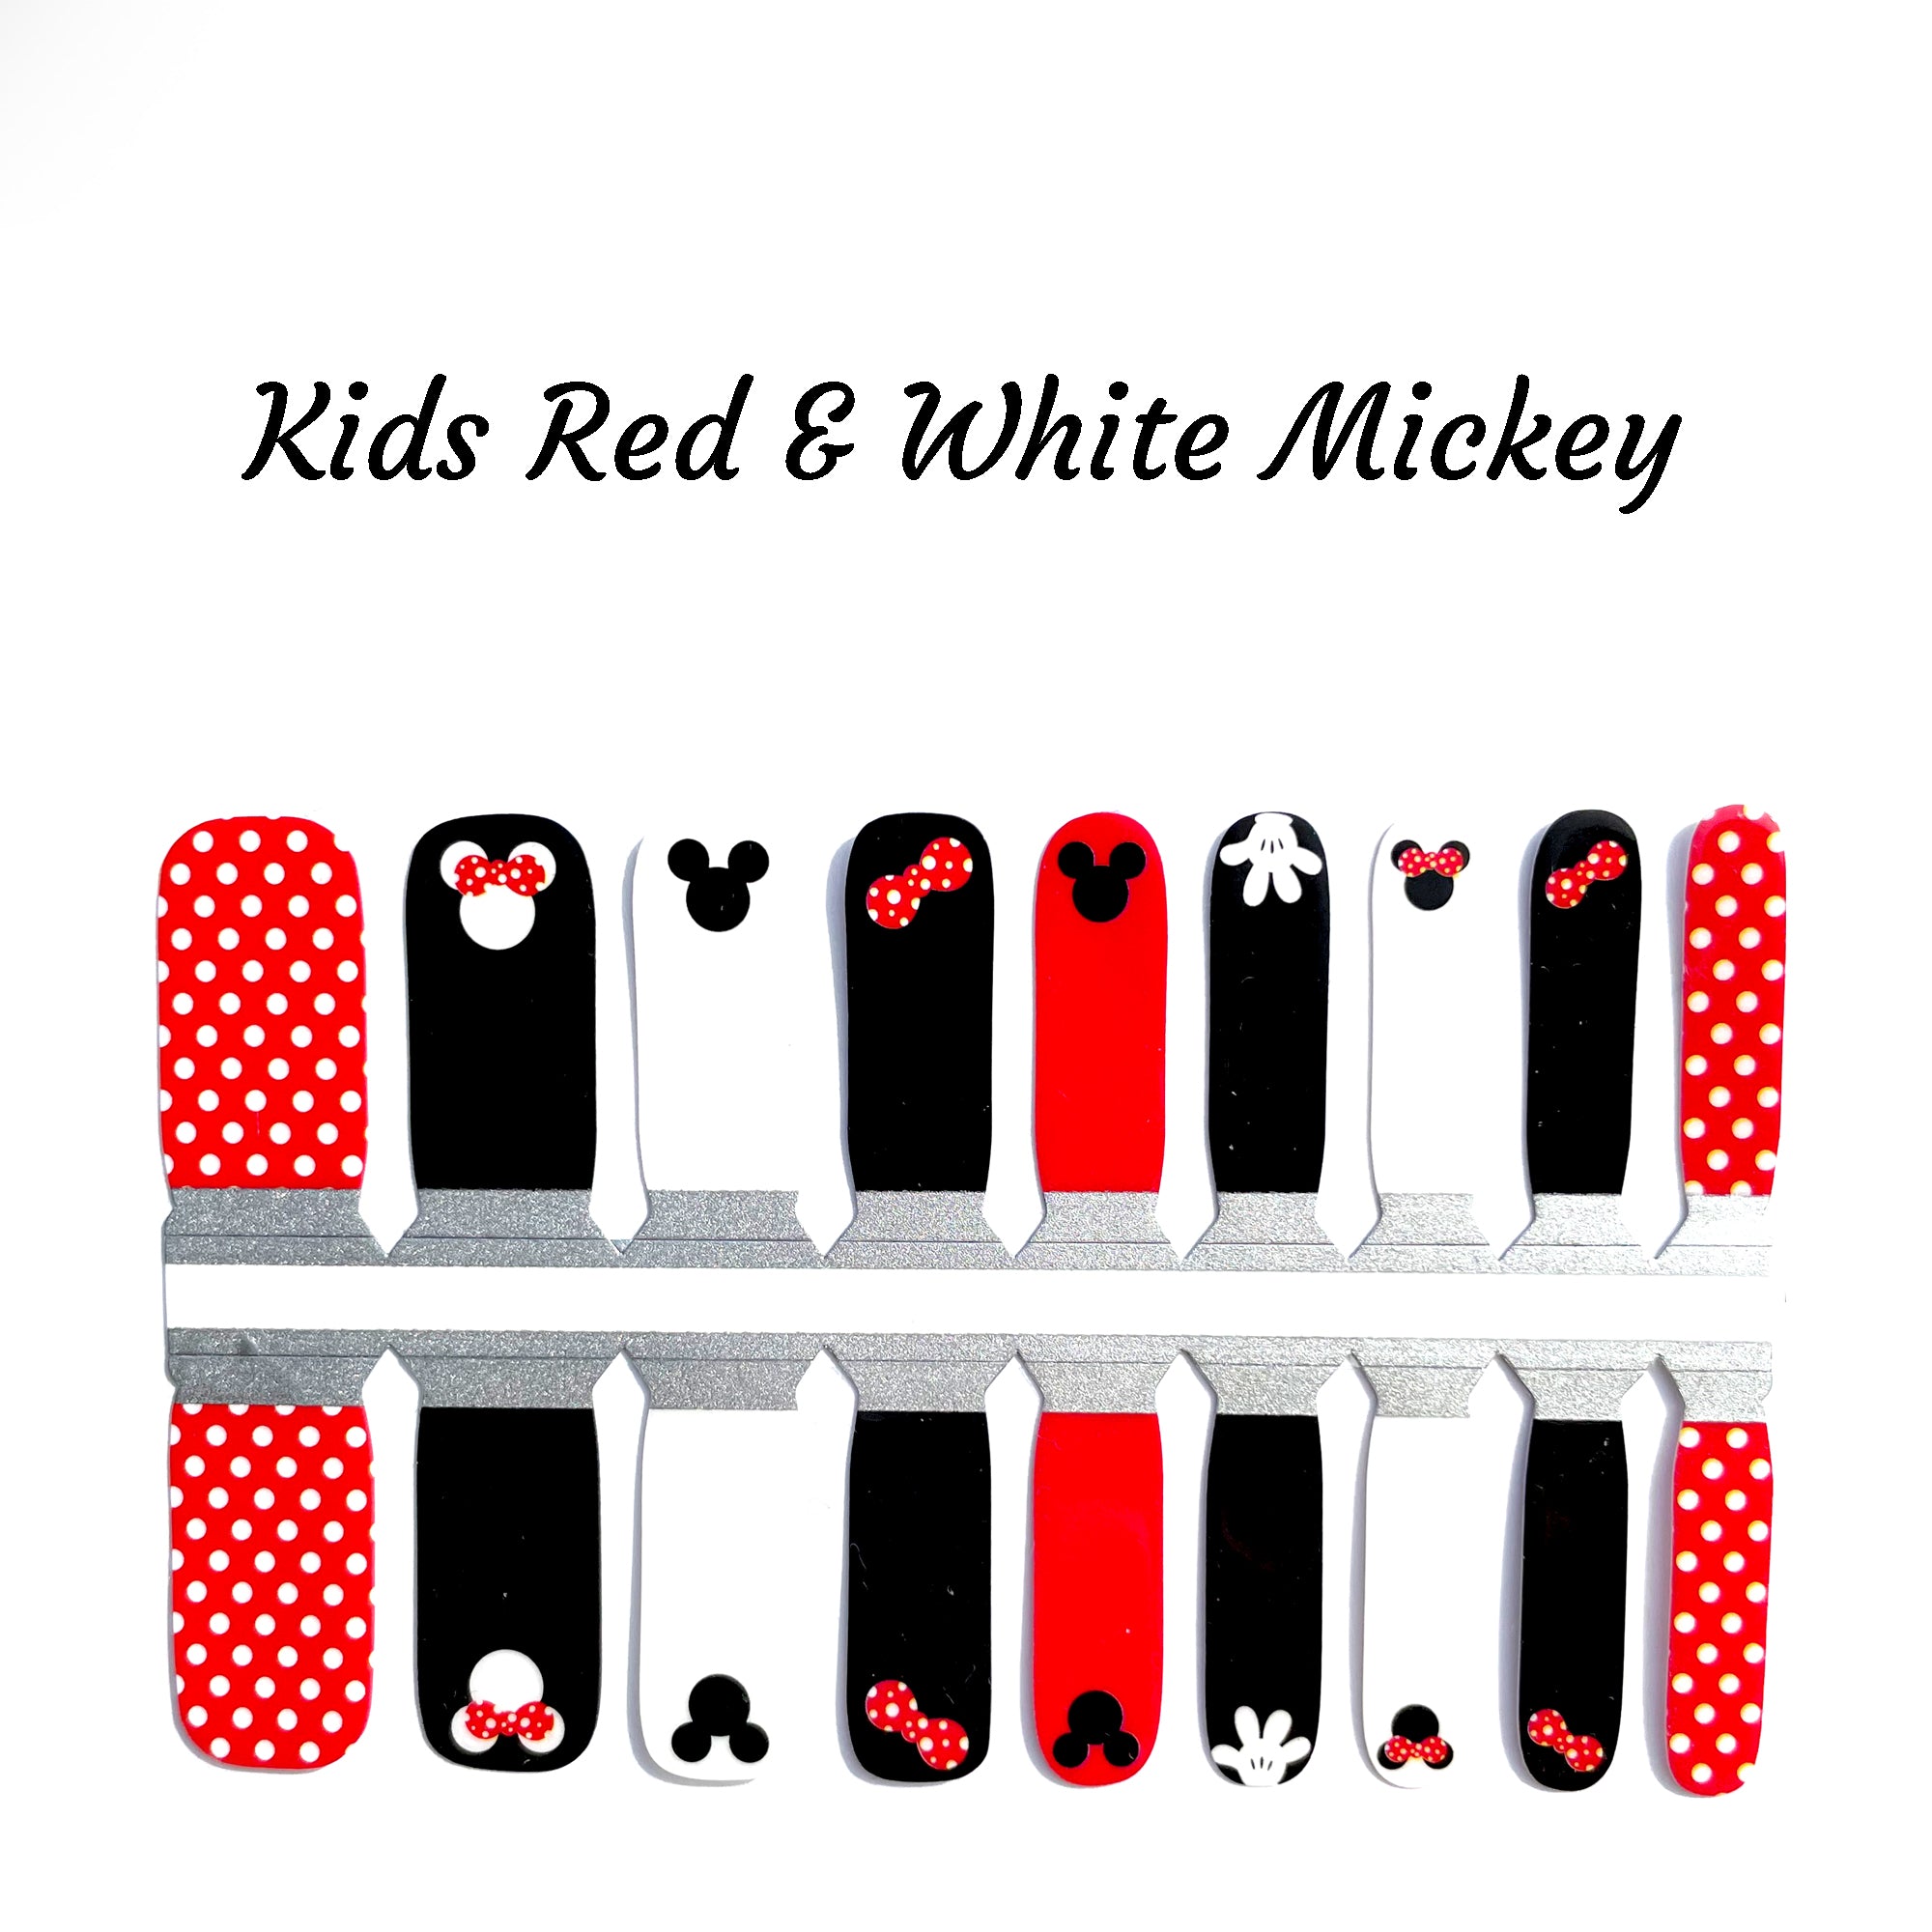 Kids Red & White Mickey